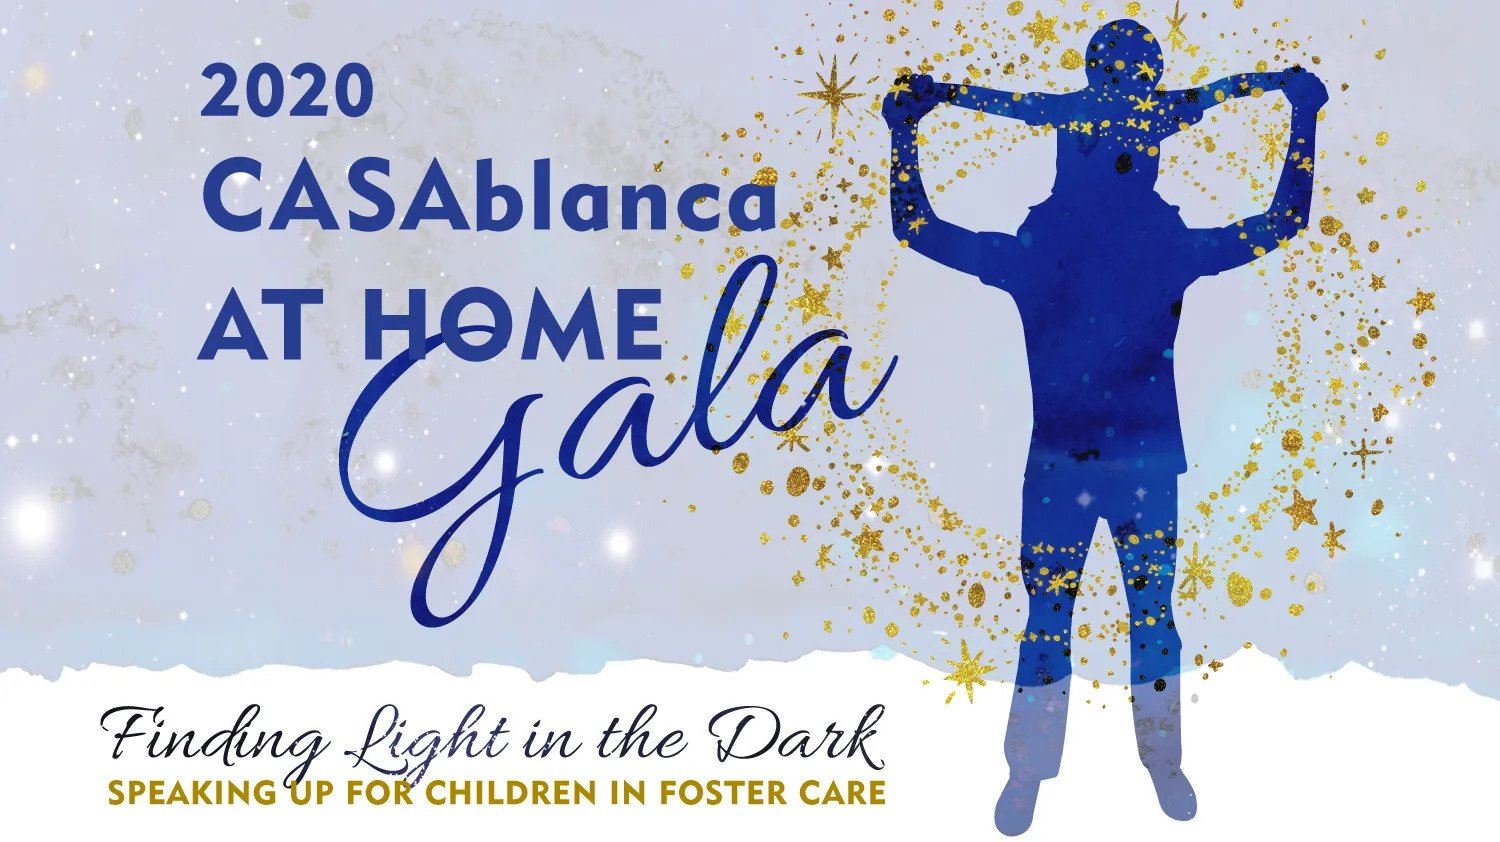 2020 CASAblanca at home Gala graphic